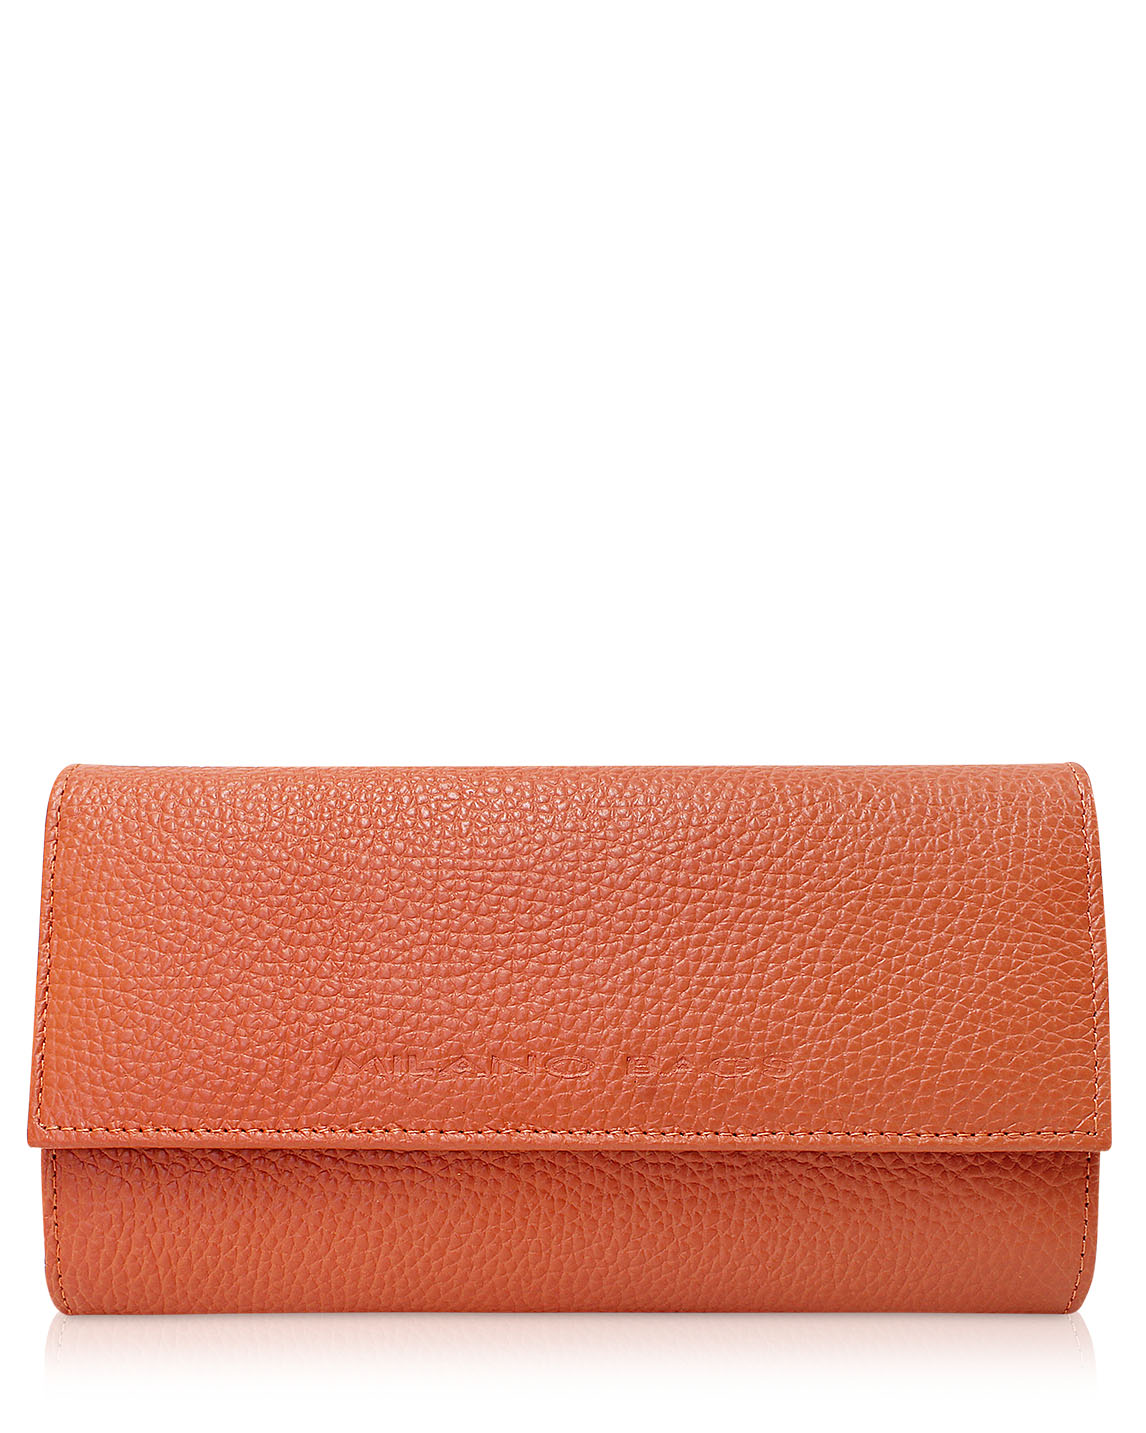 Billetera de Mujer BM-0070 Color Naranja